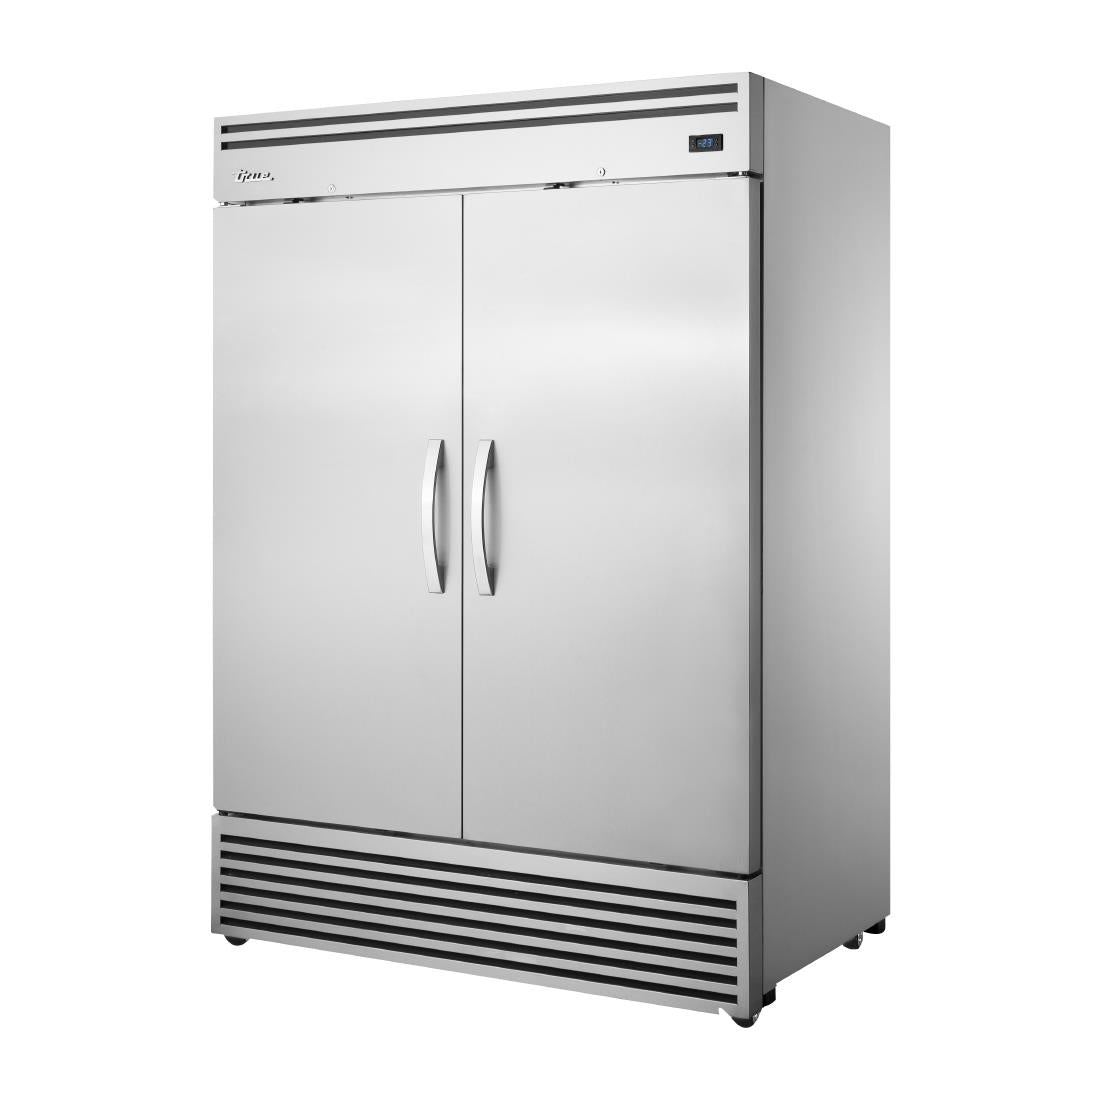 CX712 True 2/1 GN Double Door Upright Foodservice Freezer TGN-2F-2S JD Catering Equipment Solutions Ltd